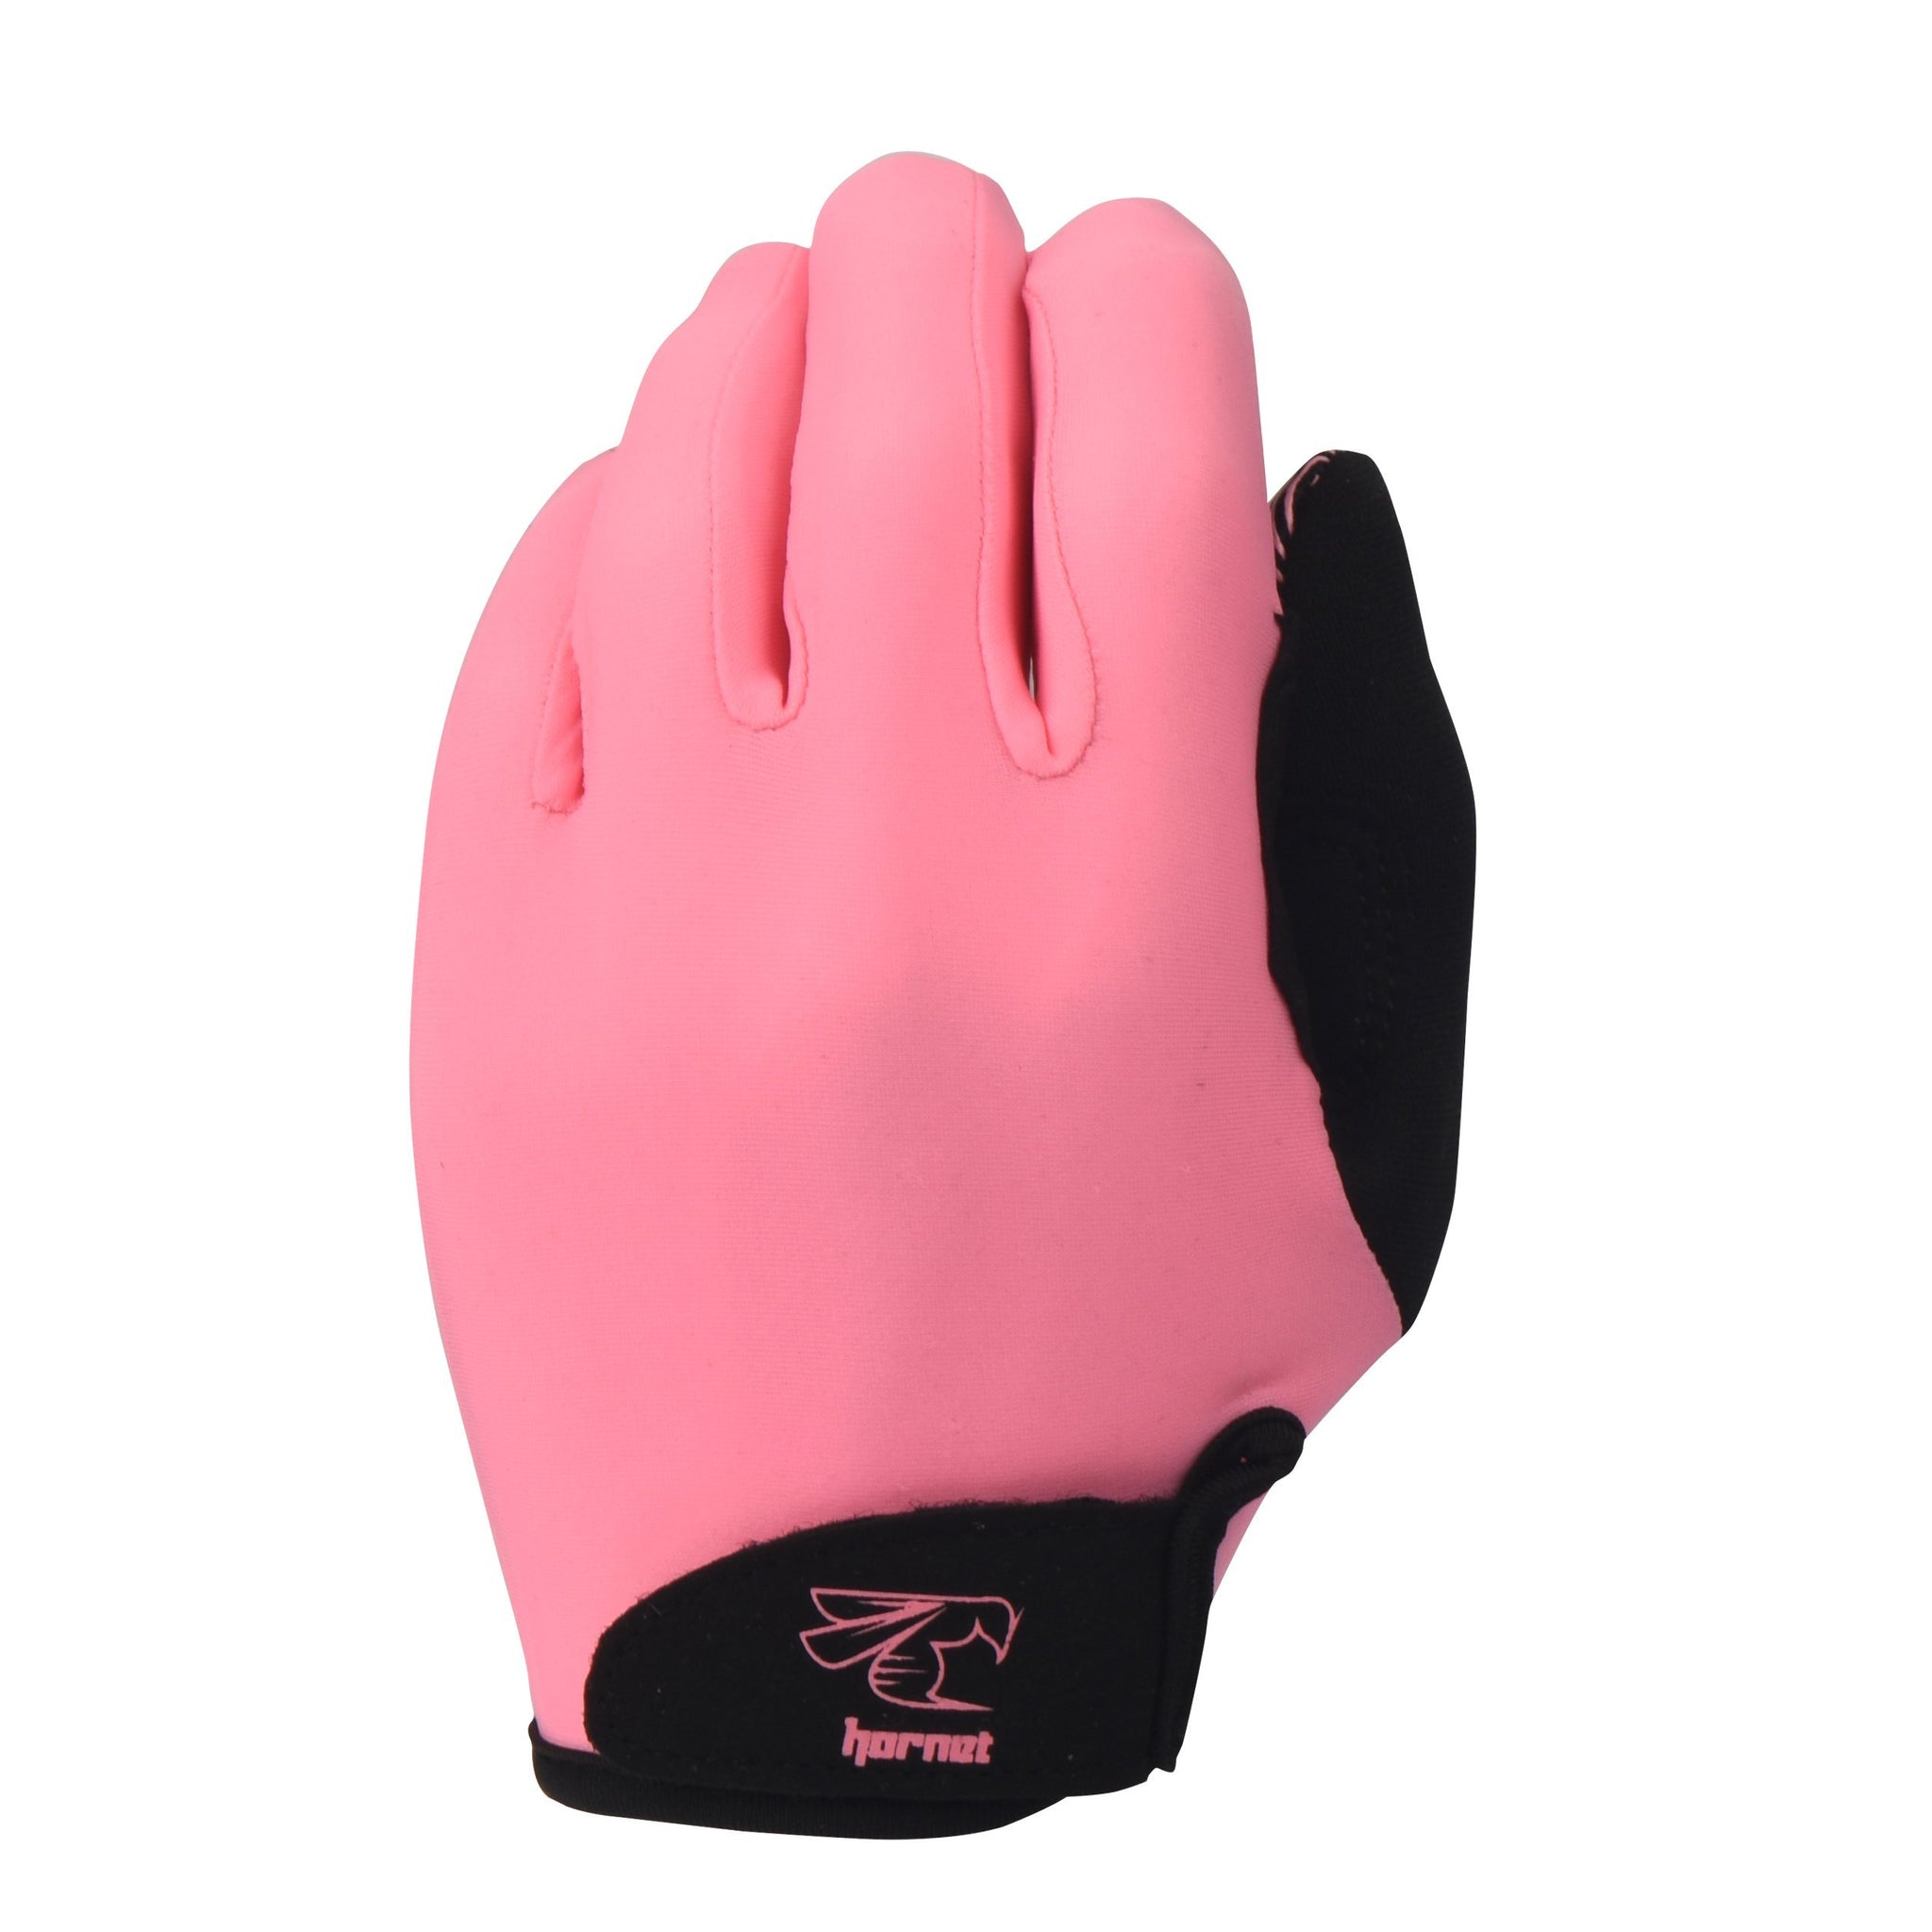 Safe Handler Nitrile Pink/Black OSFM Firm Grip Work Gloves (Pack of 12-Pairs)